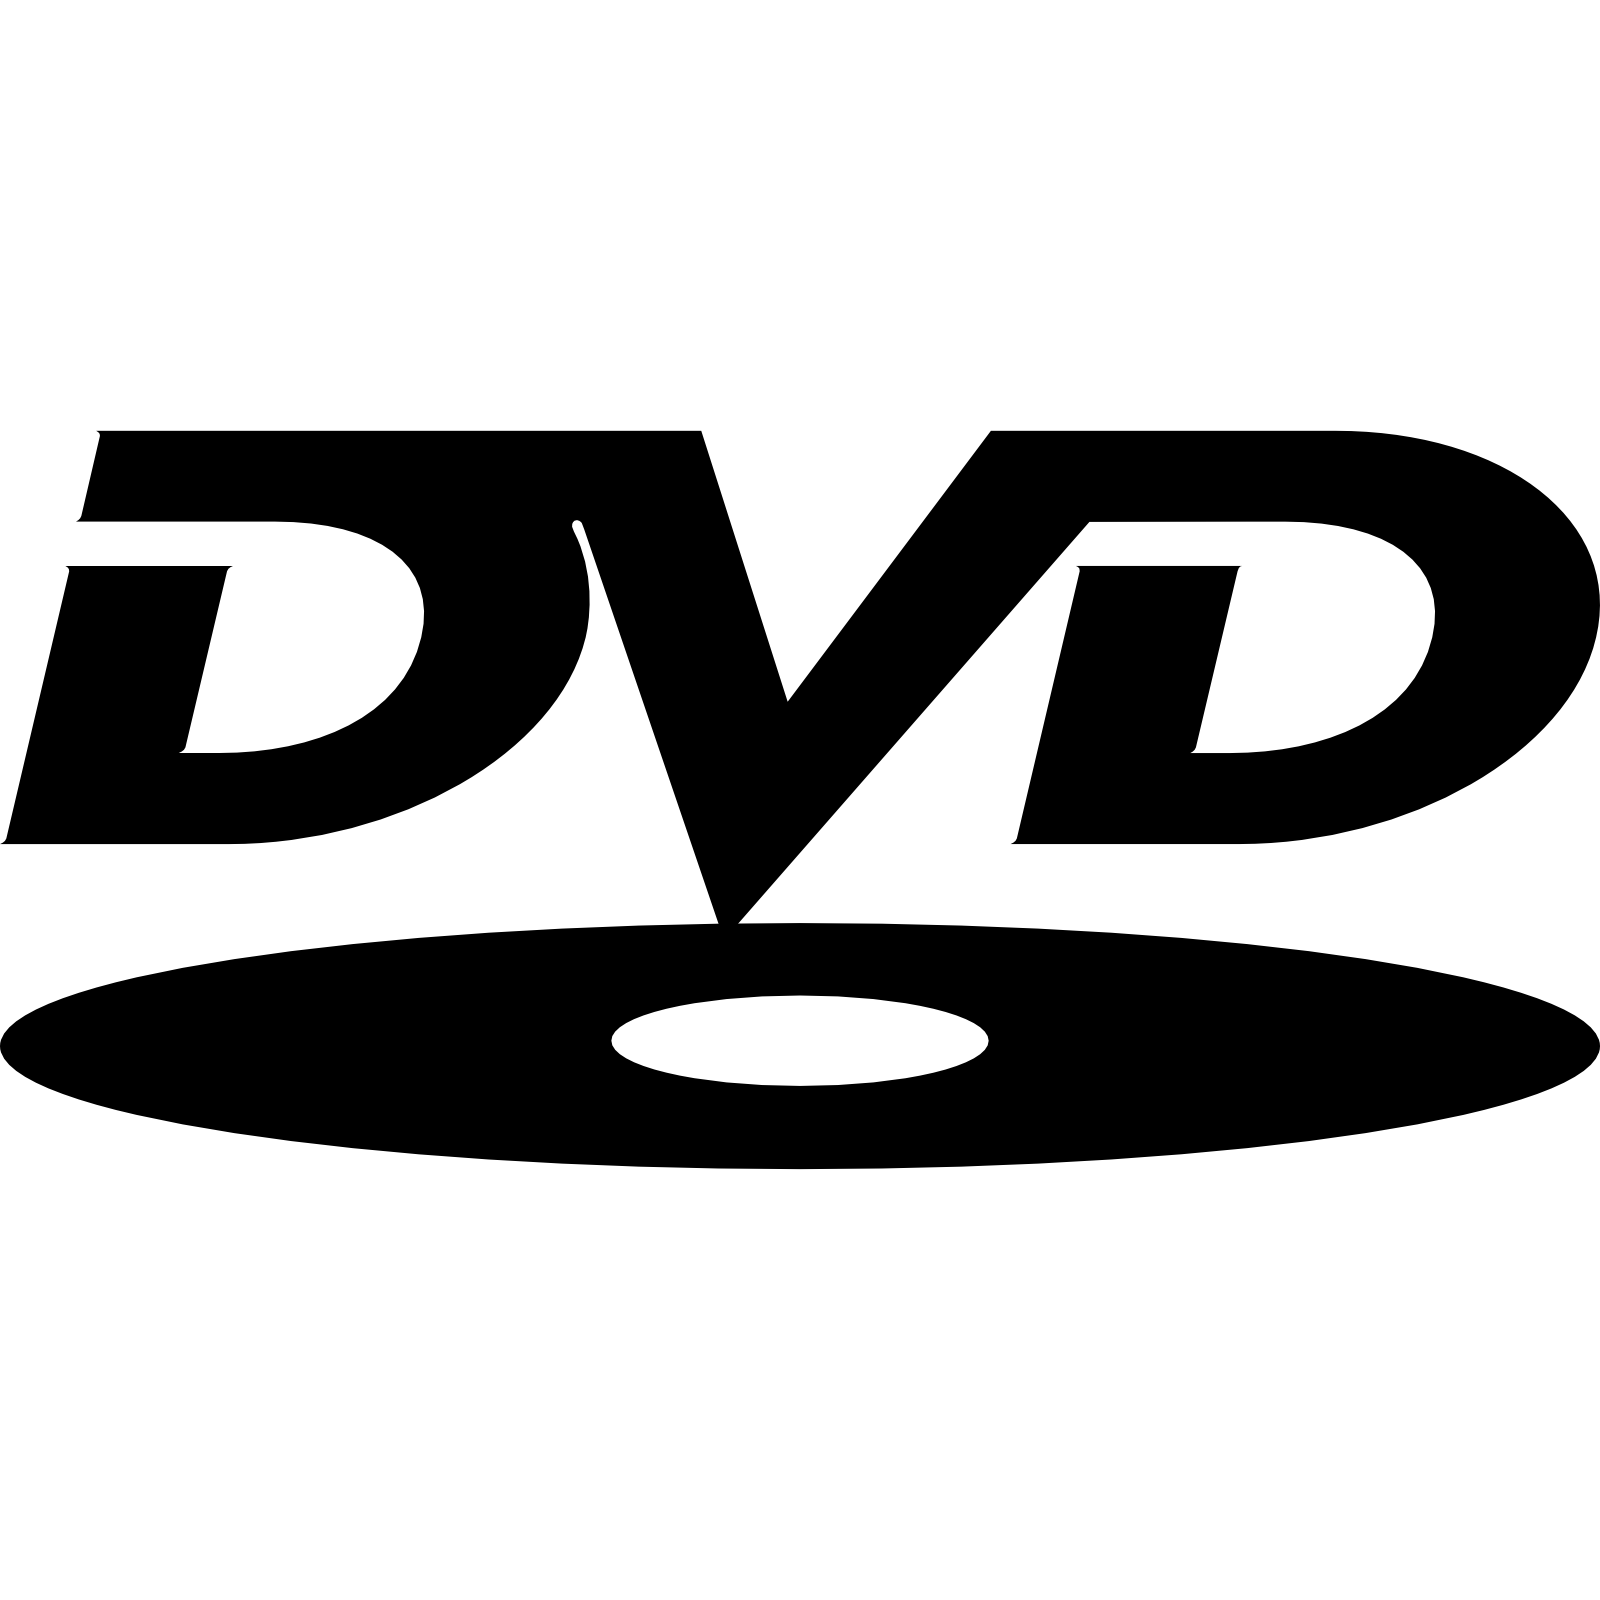 Image - Dvd logo1600.png | Logopedia | FANDOM powered by Wikia